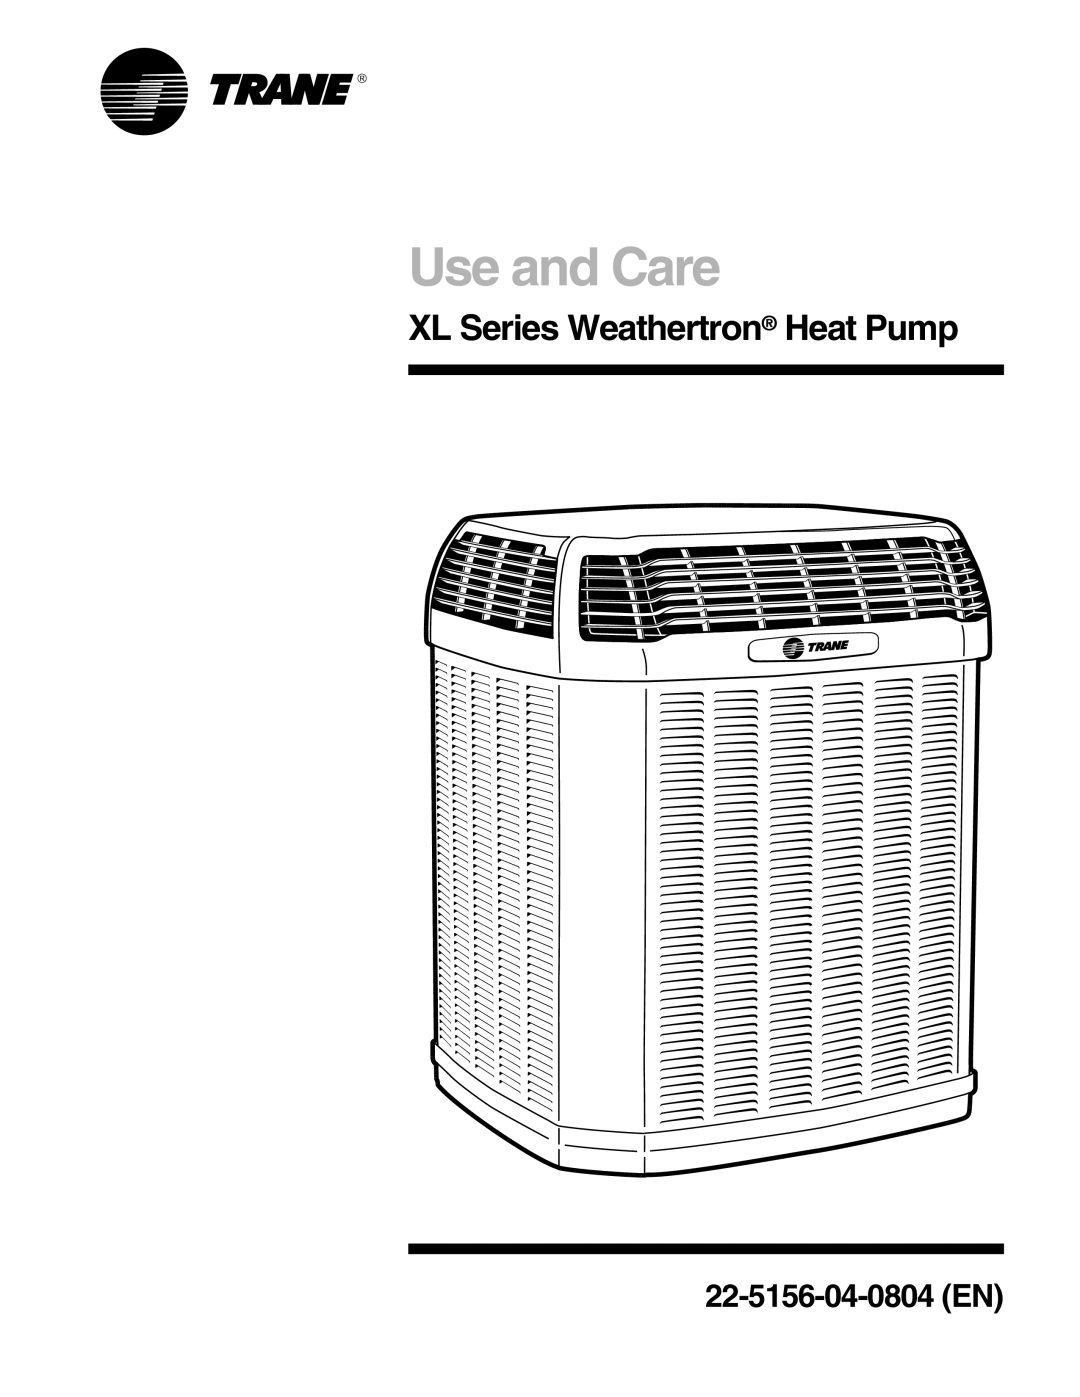 Trane manual XL Series Weathertron Heat Pump, Use and Care, 22-5156-04-0804EN 